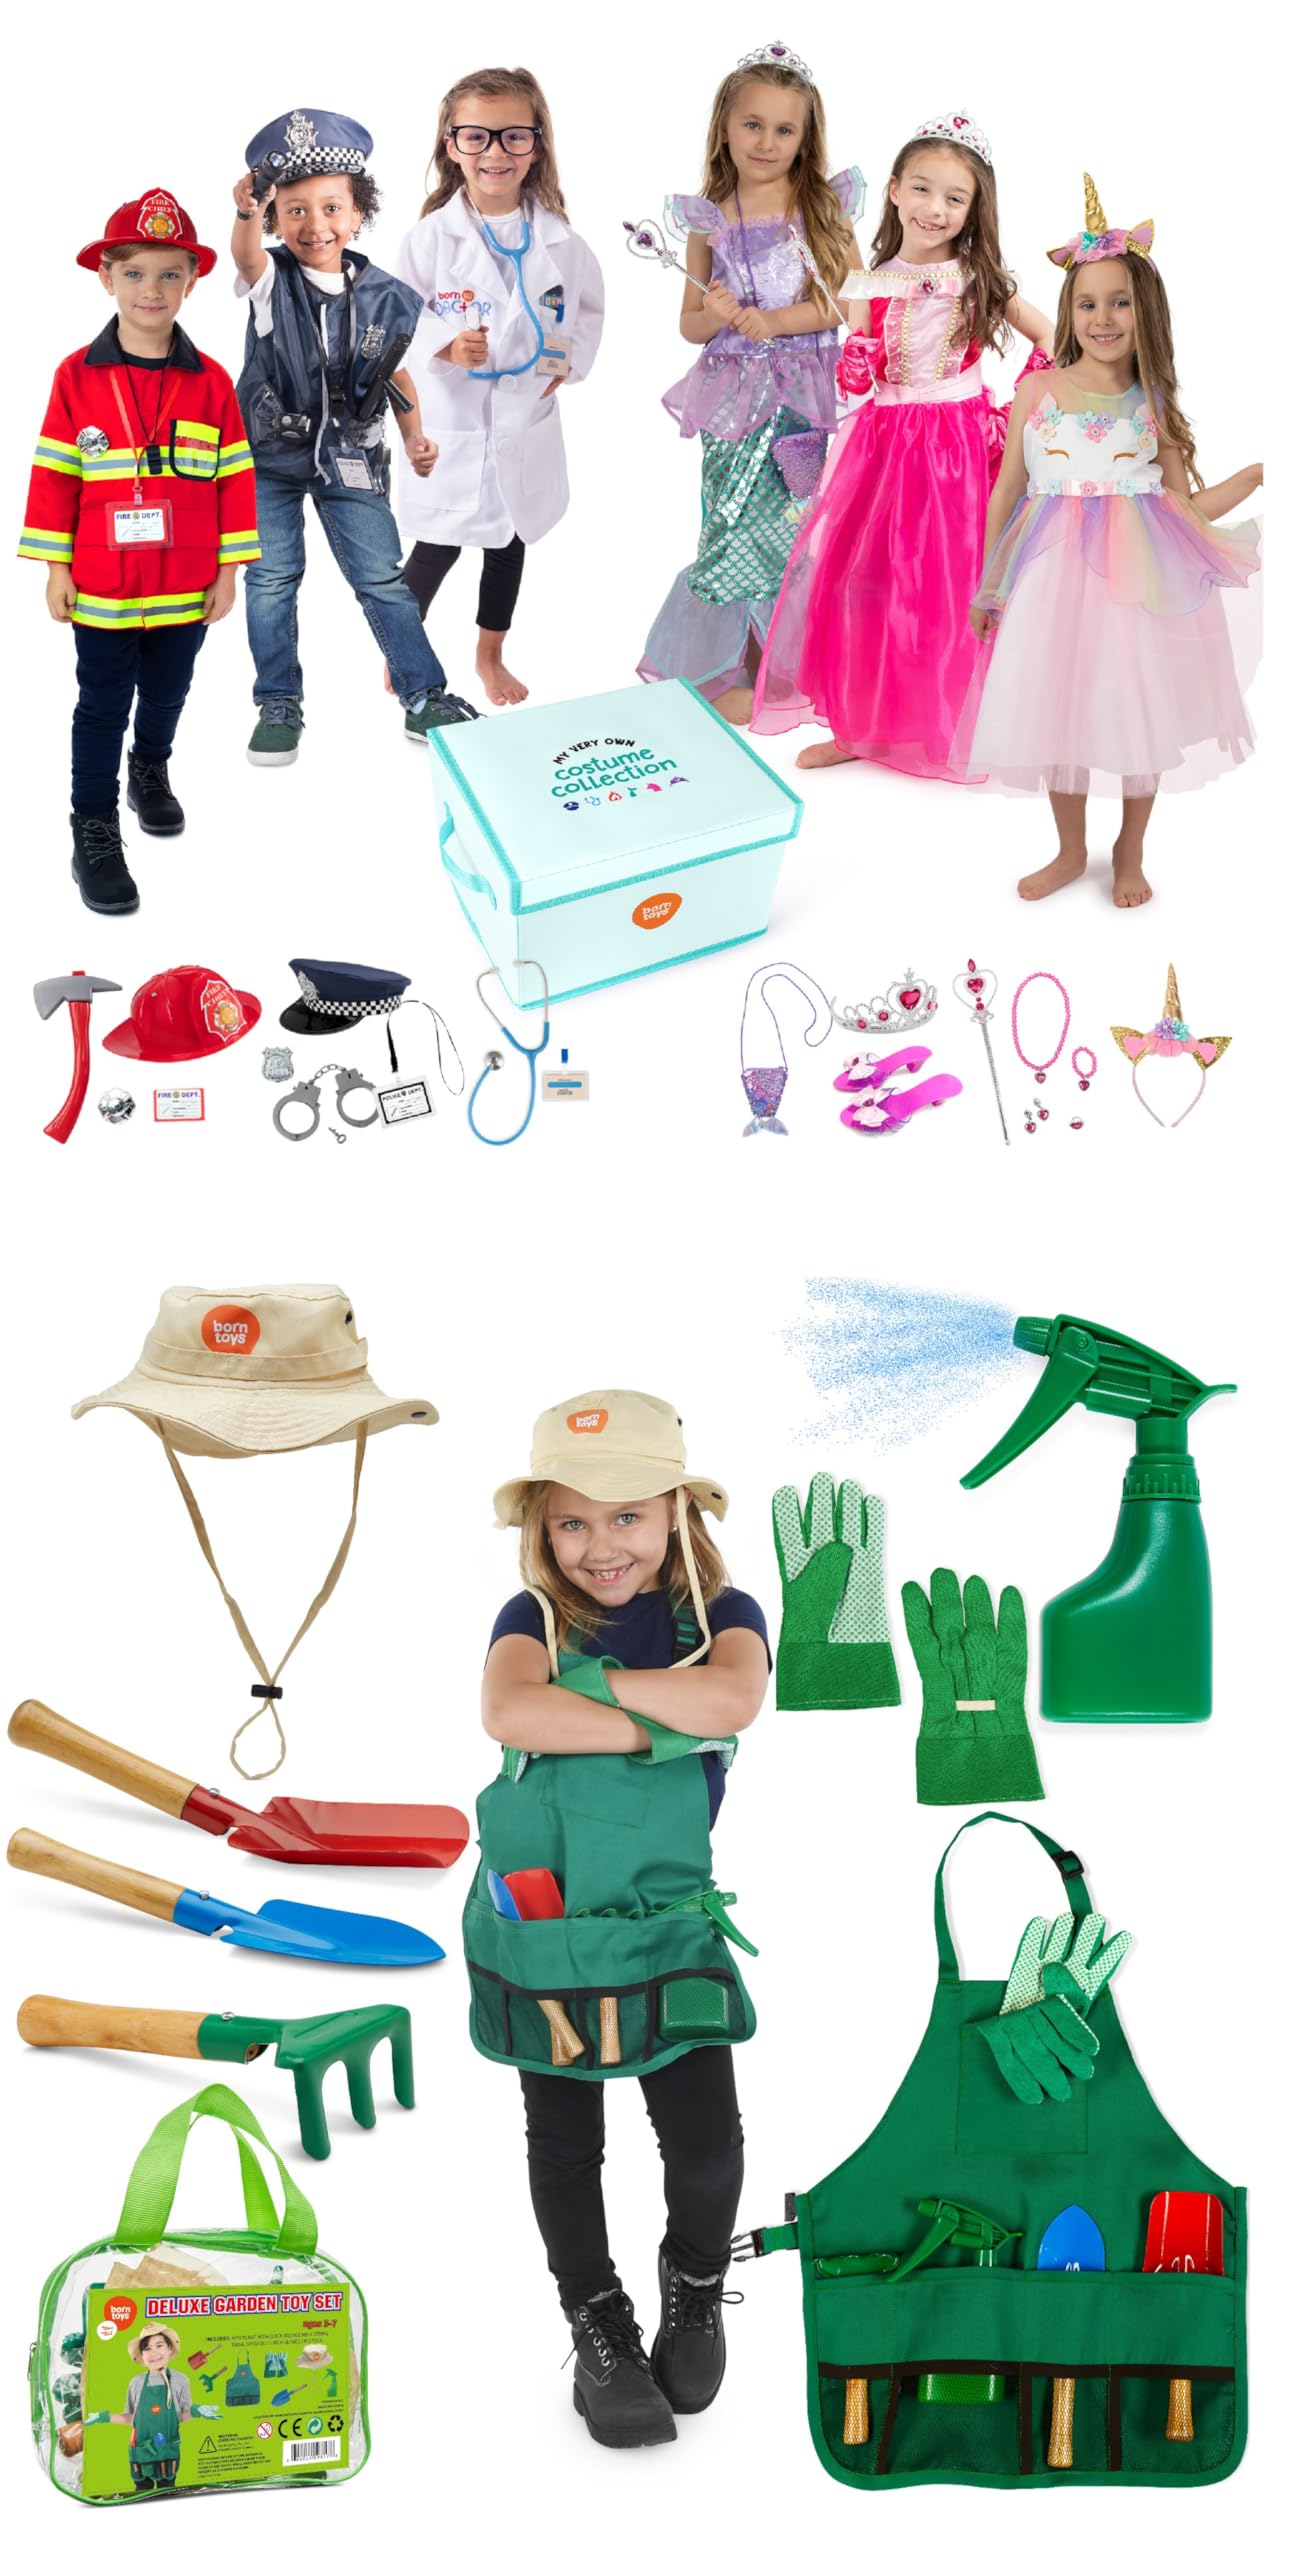 Born Toys Fantasy and First Responder Set - Fireman, Police, Doctor, Mermaid, Princess, Unicorn Trunk Set and Gardening Set